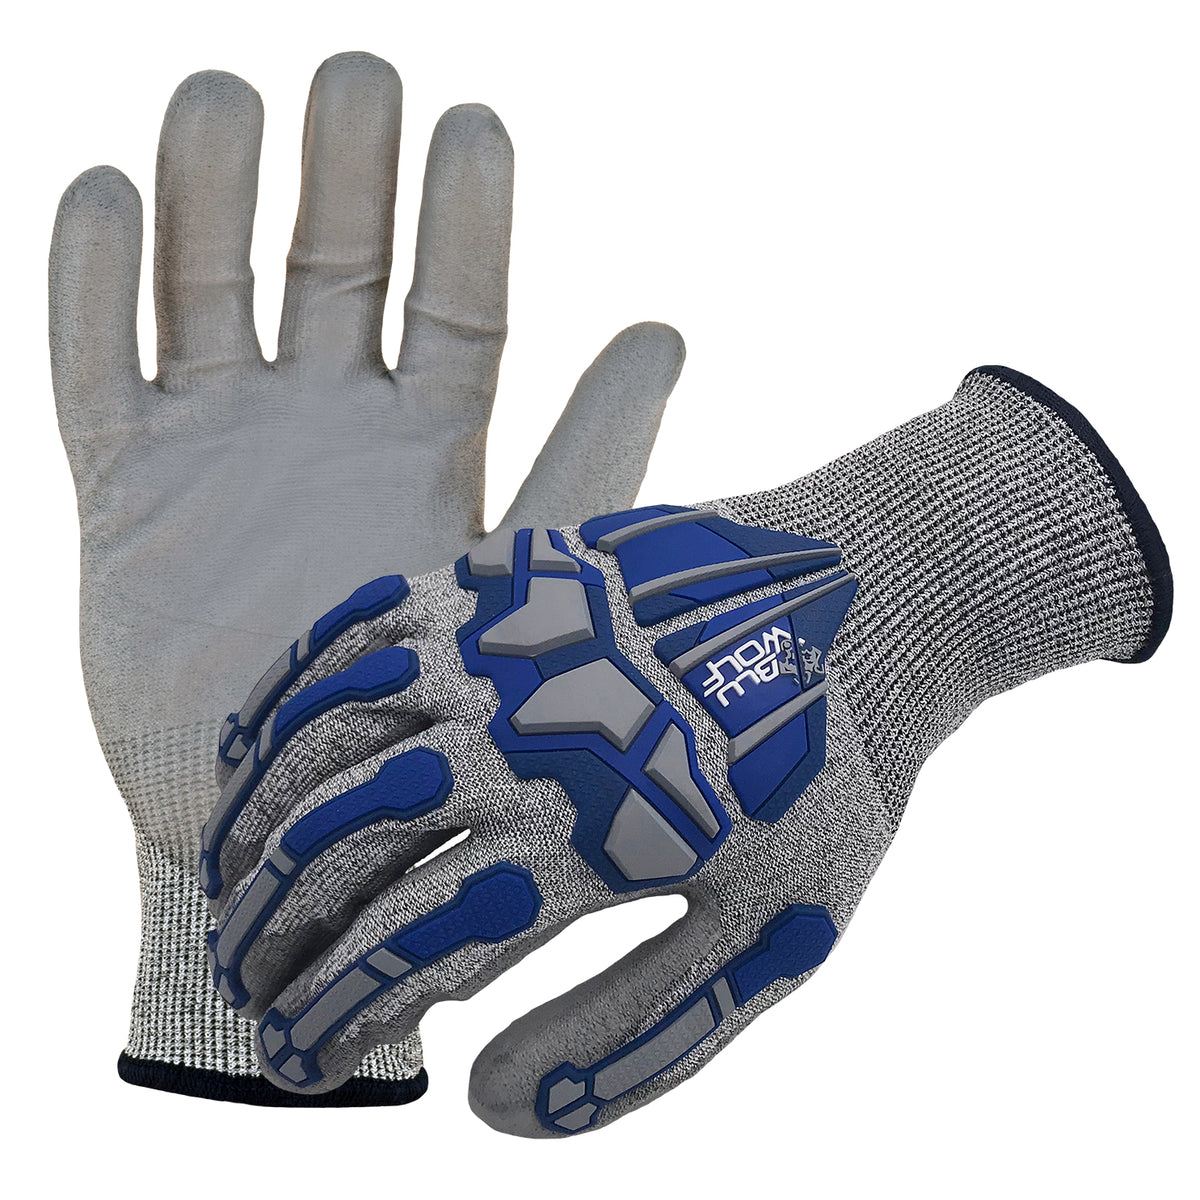 Hyper Tough HPPE ANSI A4 Anti Cut PU Coated Work Gloves, Full Fingers,  Men's Large Size